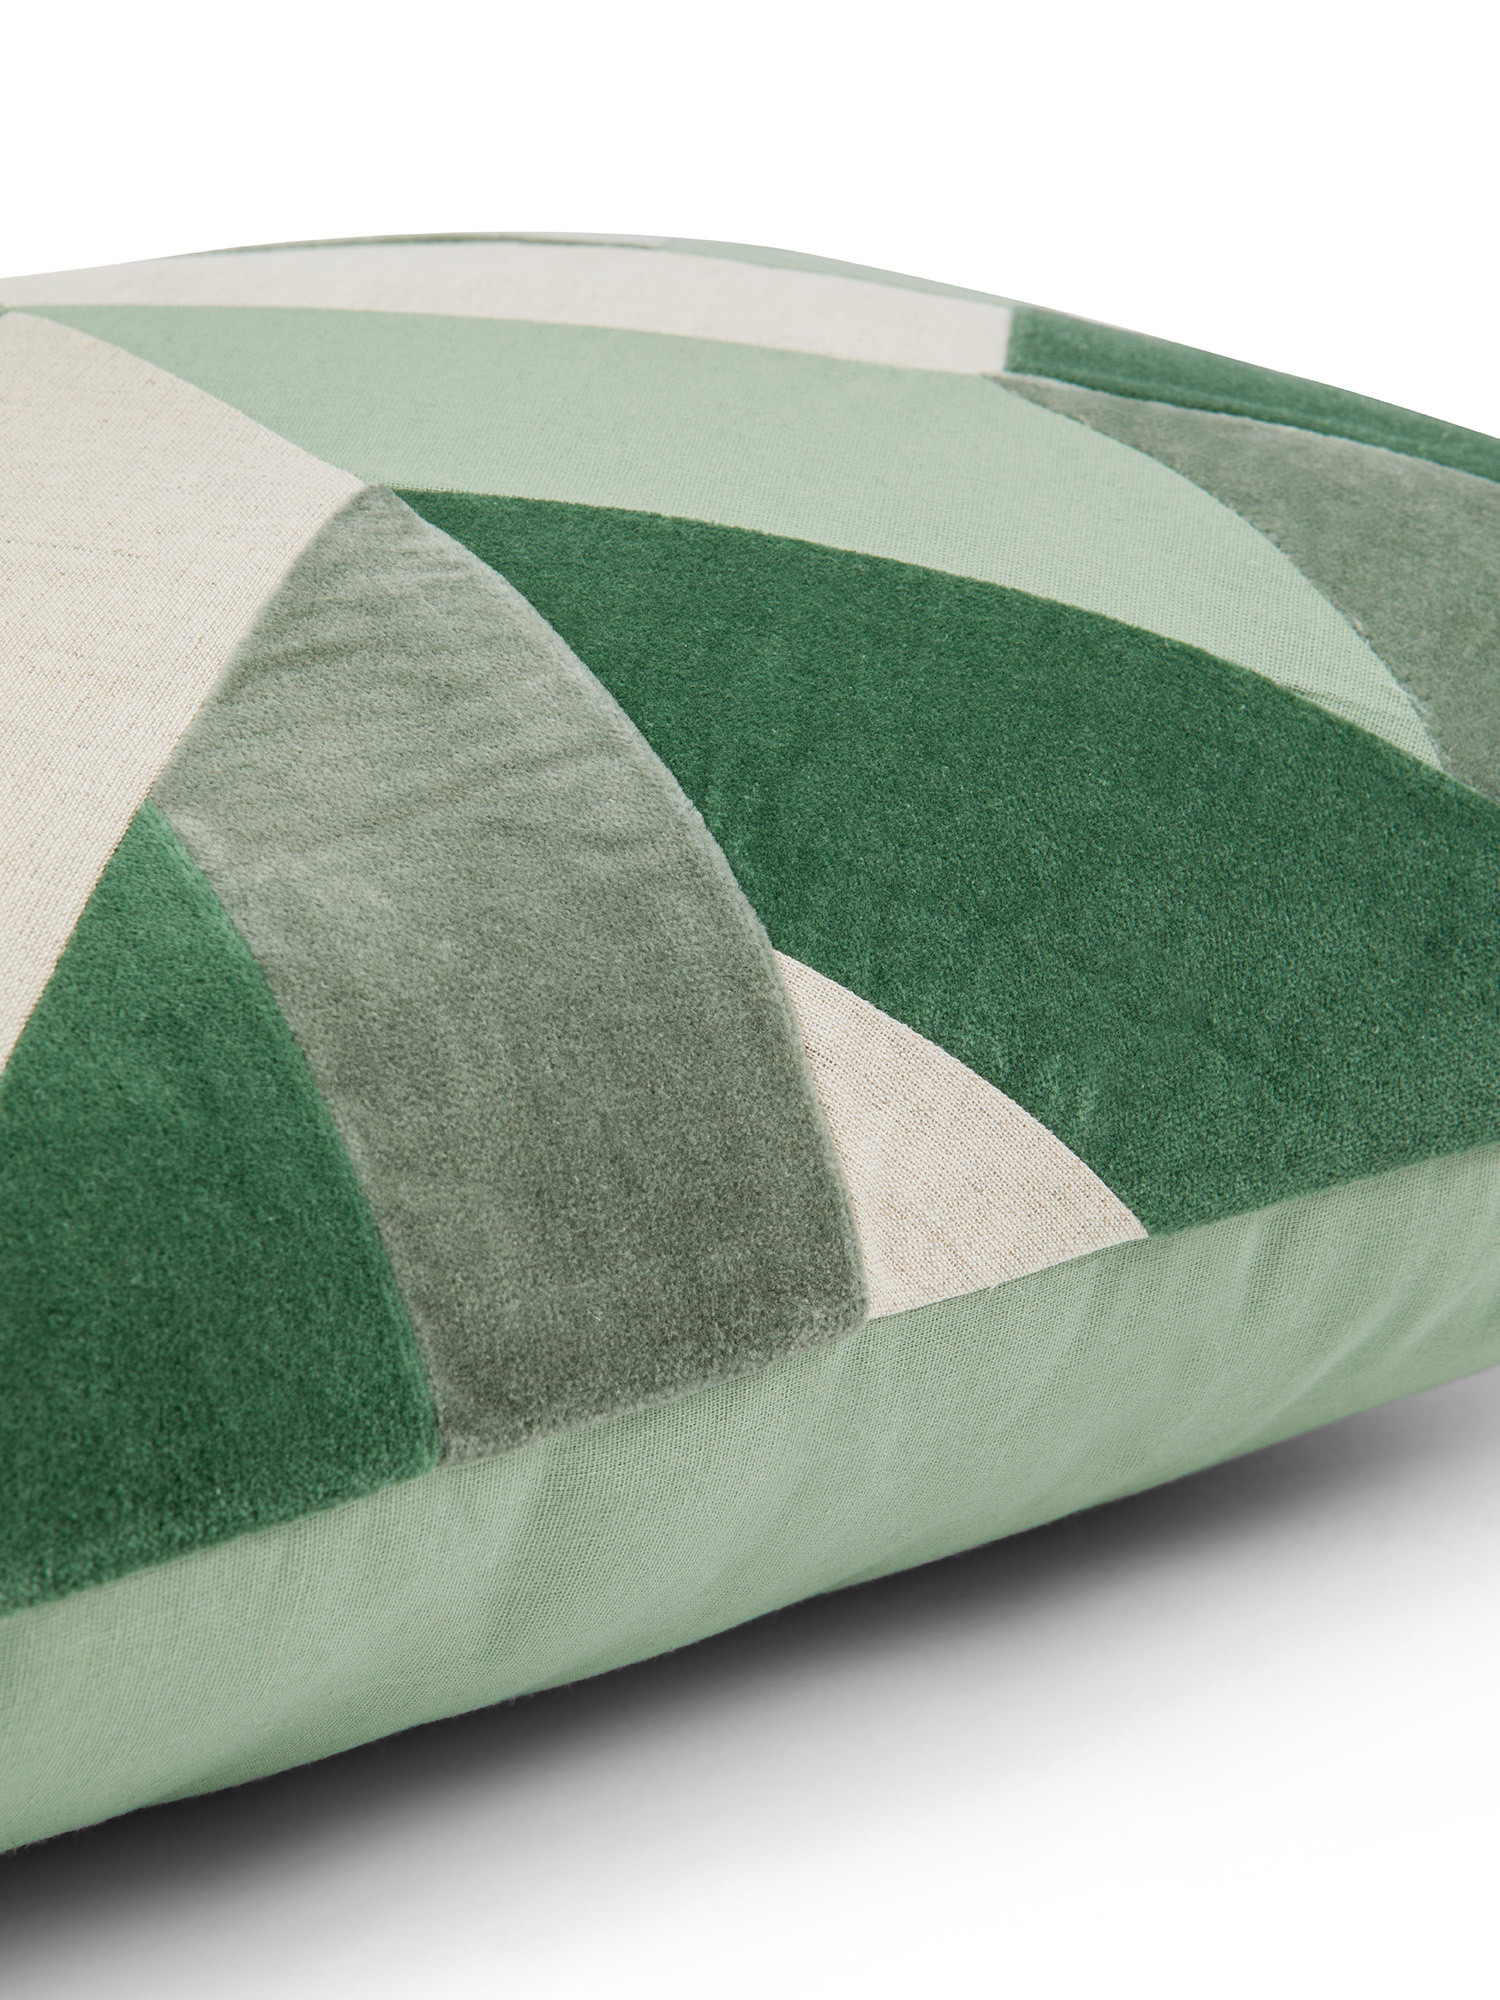 Cuscino Patchwork mix tela e velluto motivi geometrici 35X50cm, Verde, large image number 2